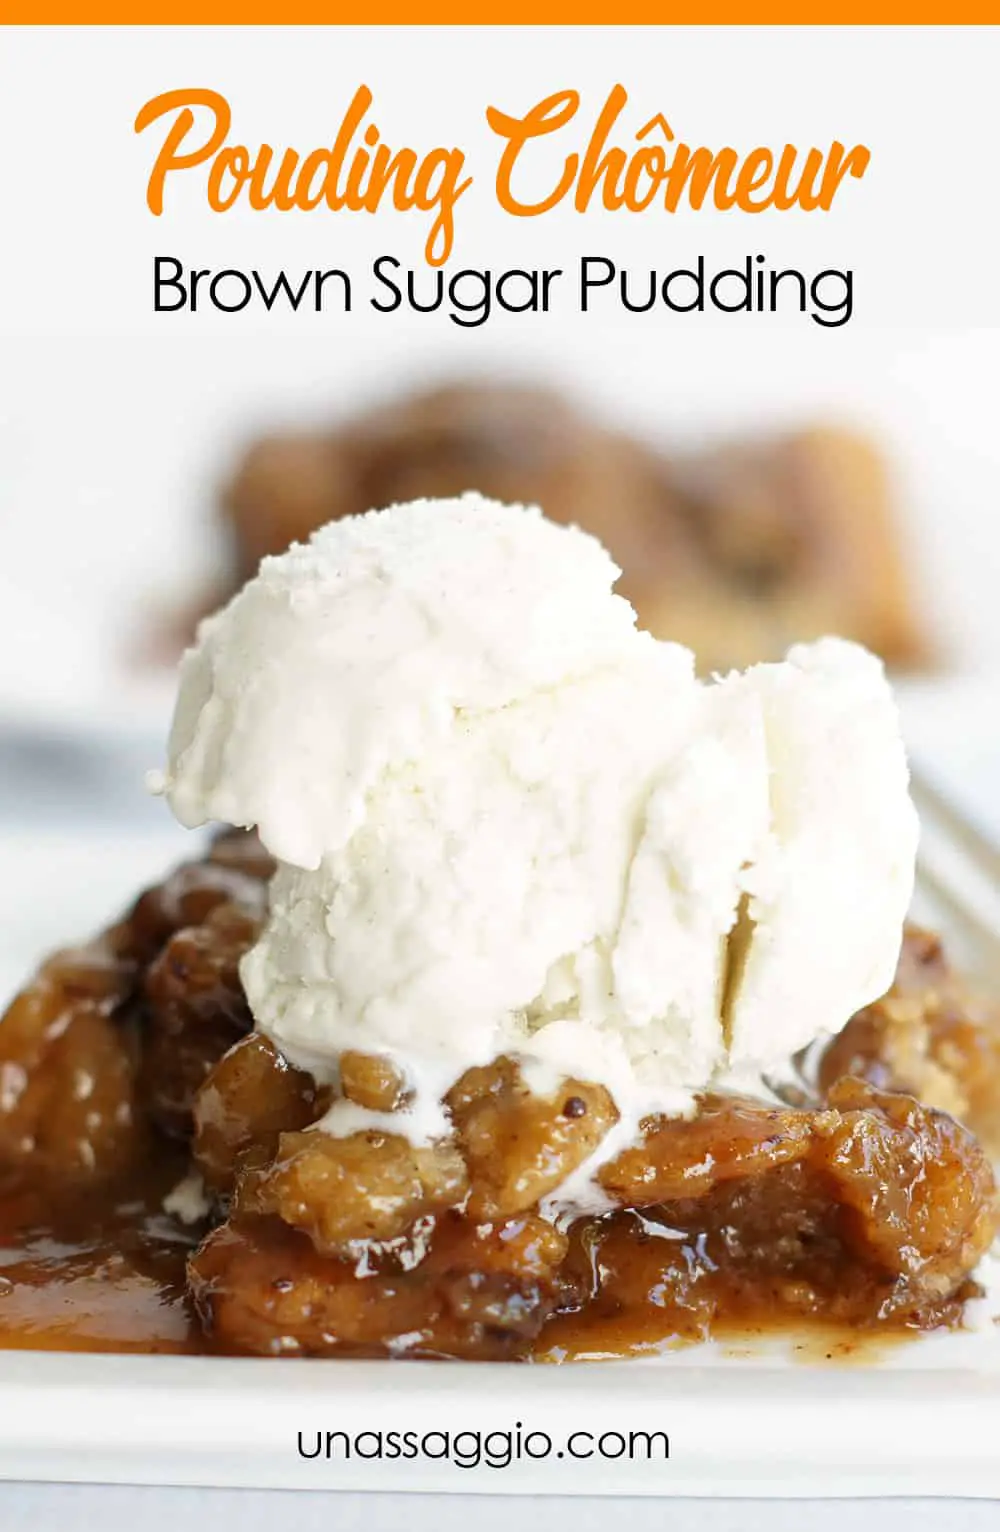 Brown Sugar Pudding | Pouding Chômeur